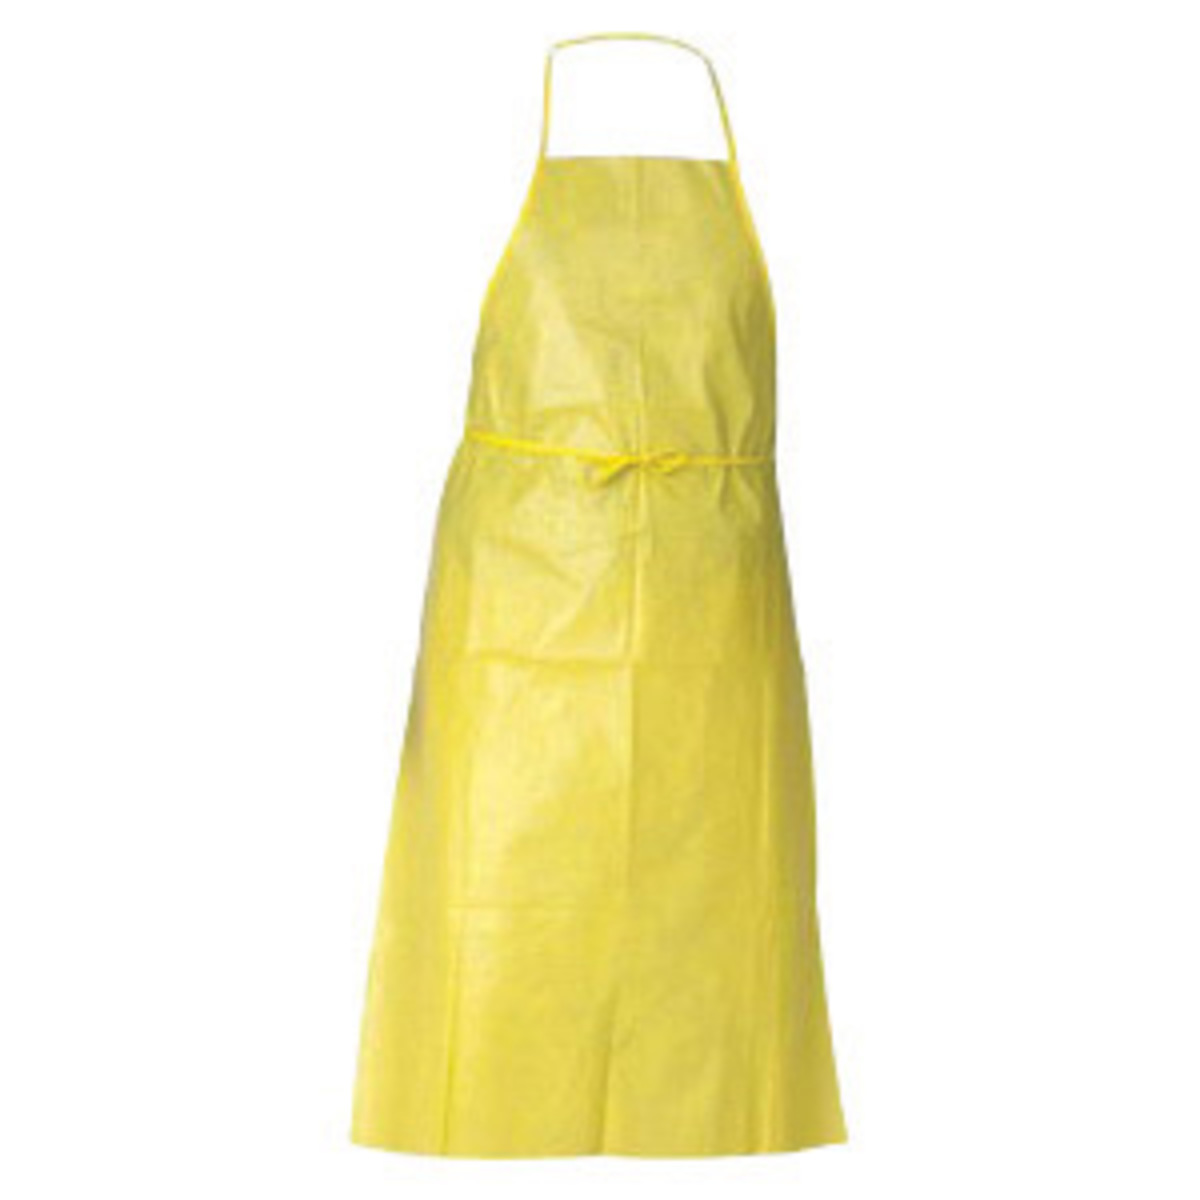 Kimberly-Clark Professional* Yellow KleenGuard* A70 1.5 mil Polypropylene Apron (Availability restrictions apply.)